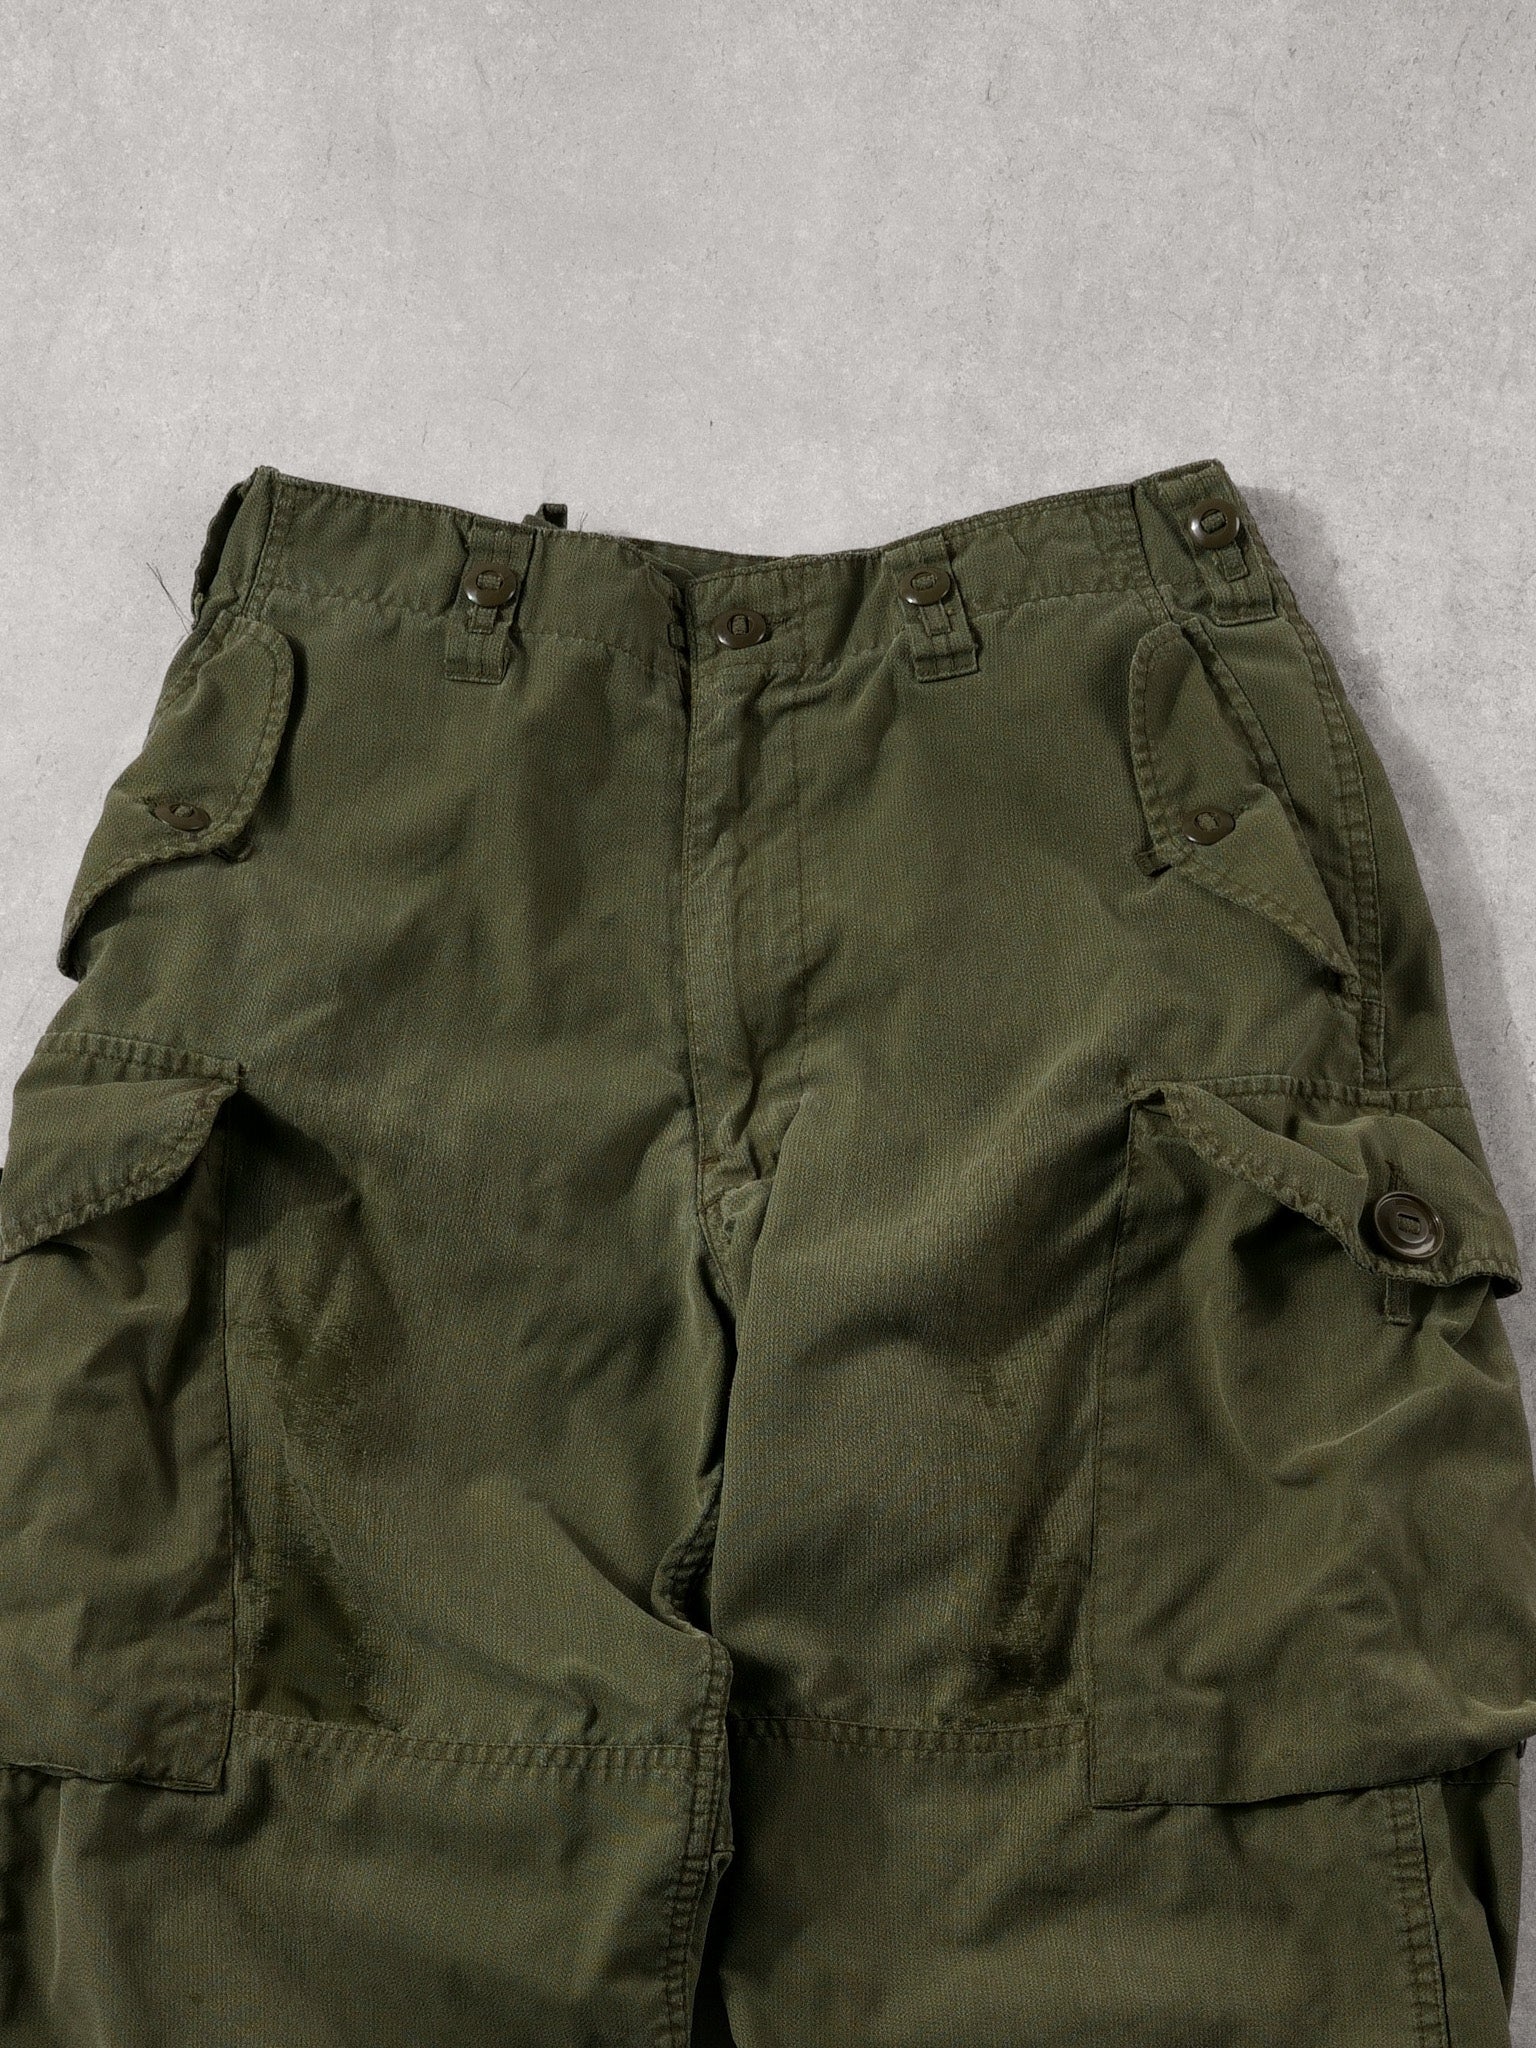 Vintage 80s Green Army Parachute Pants (32x28)